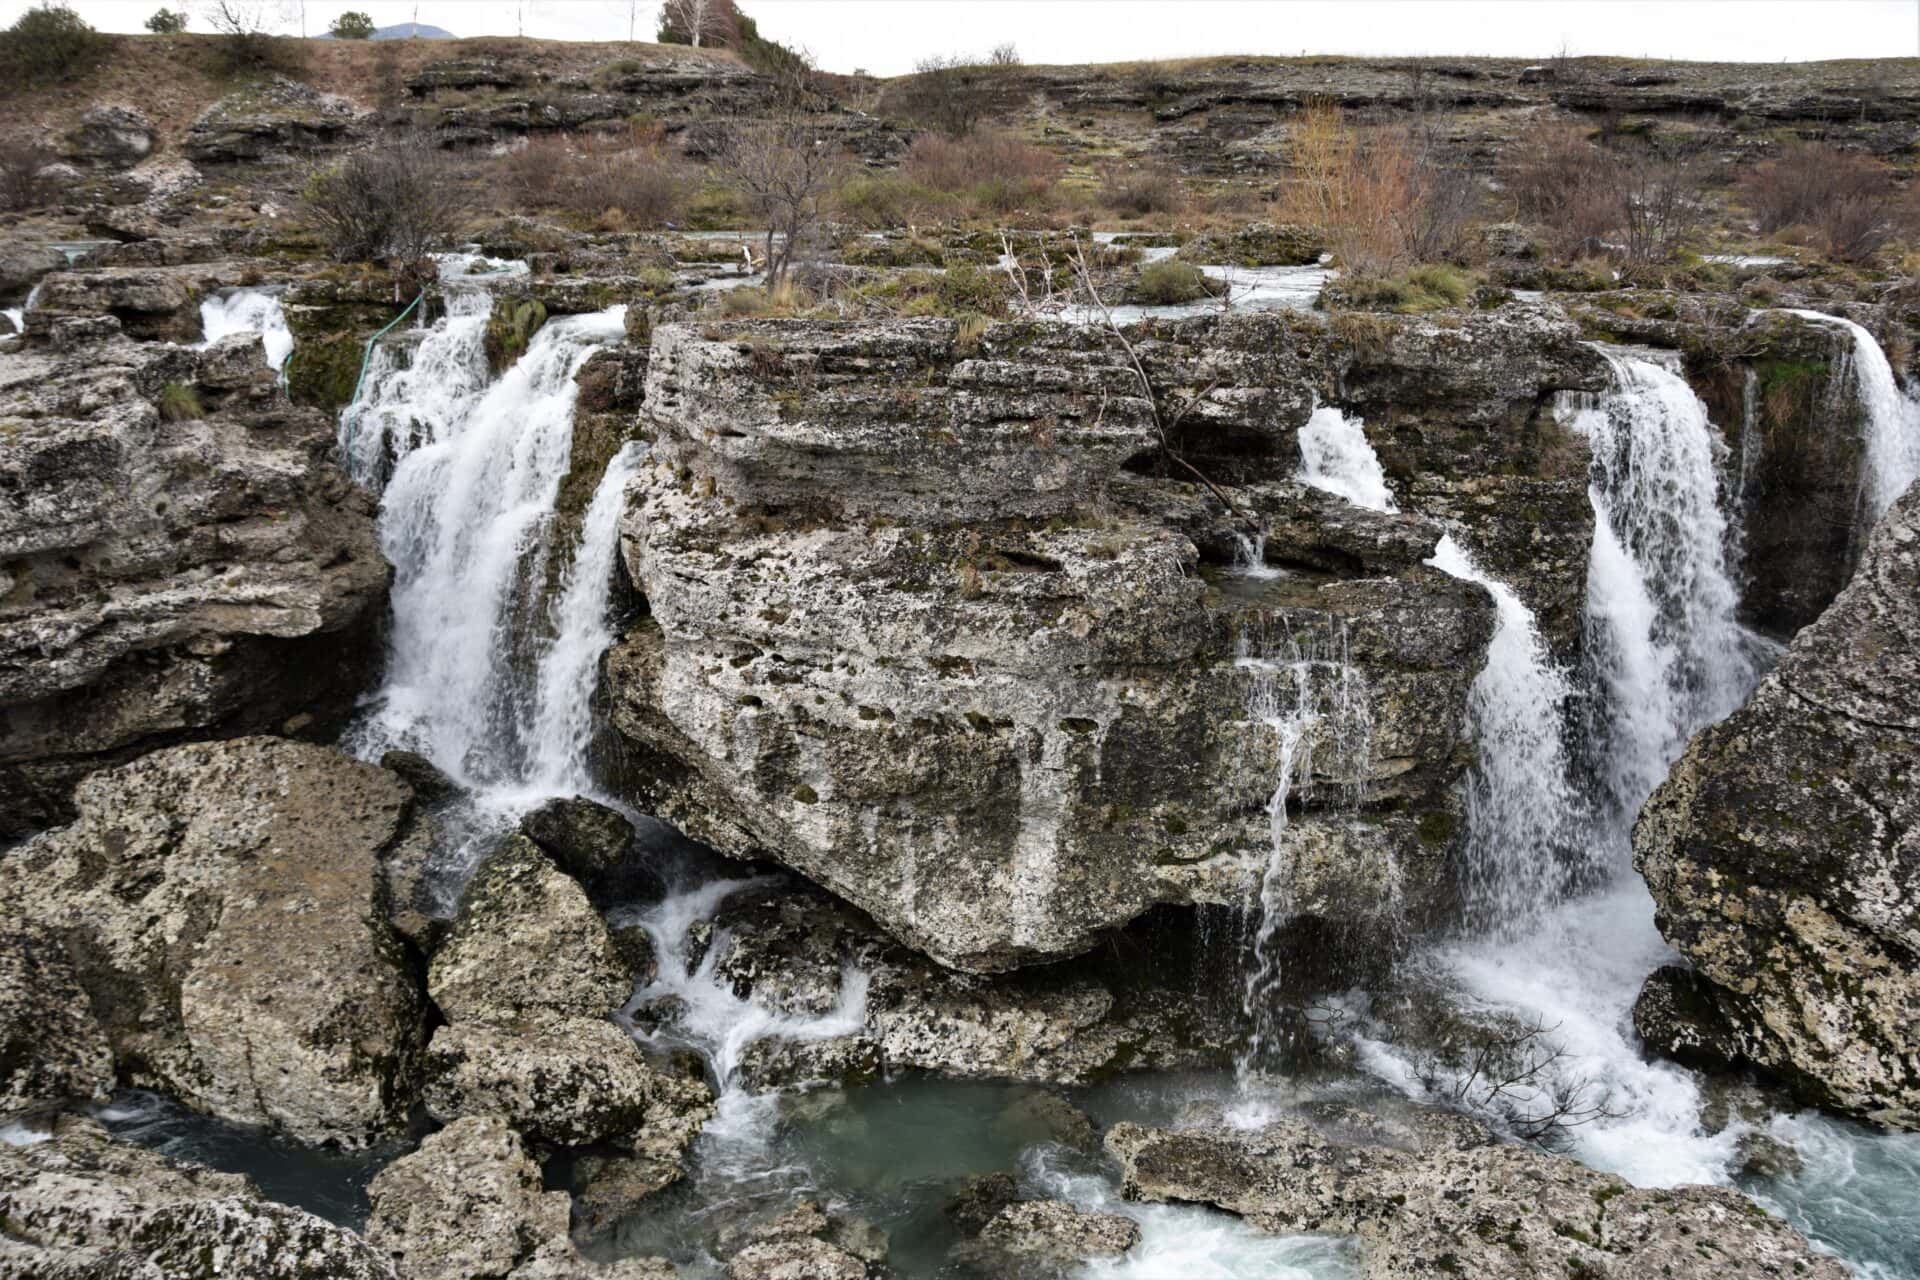 water cascades across a karst rock formation